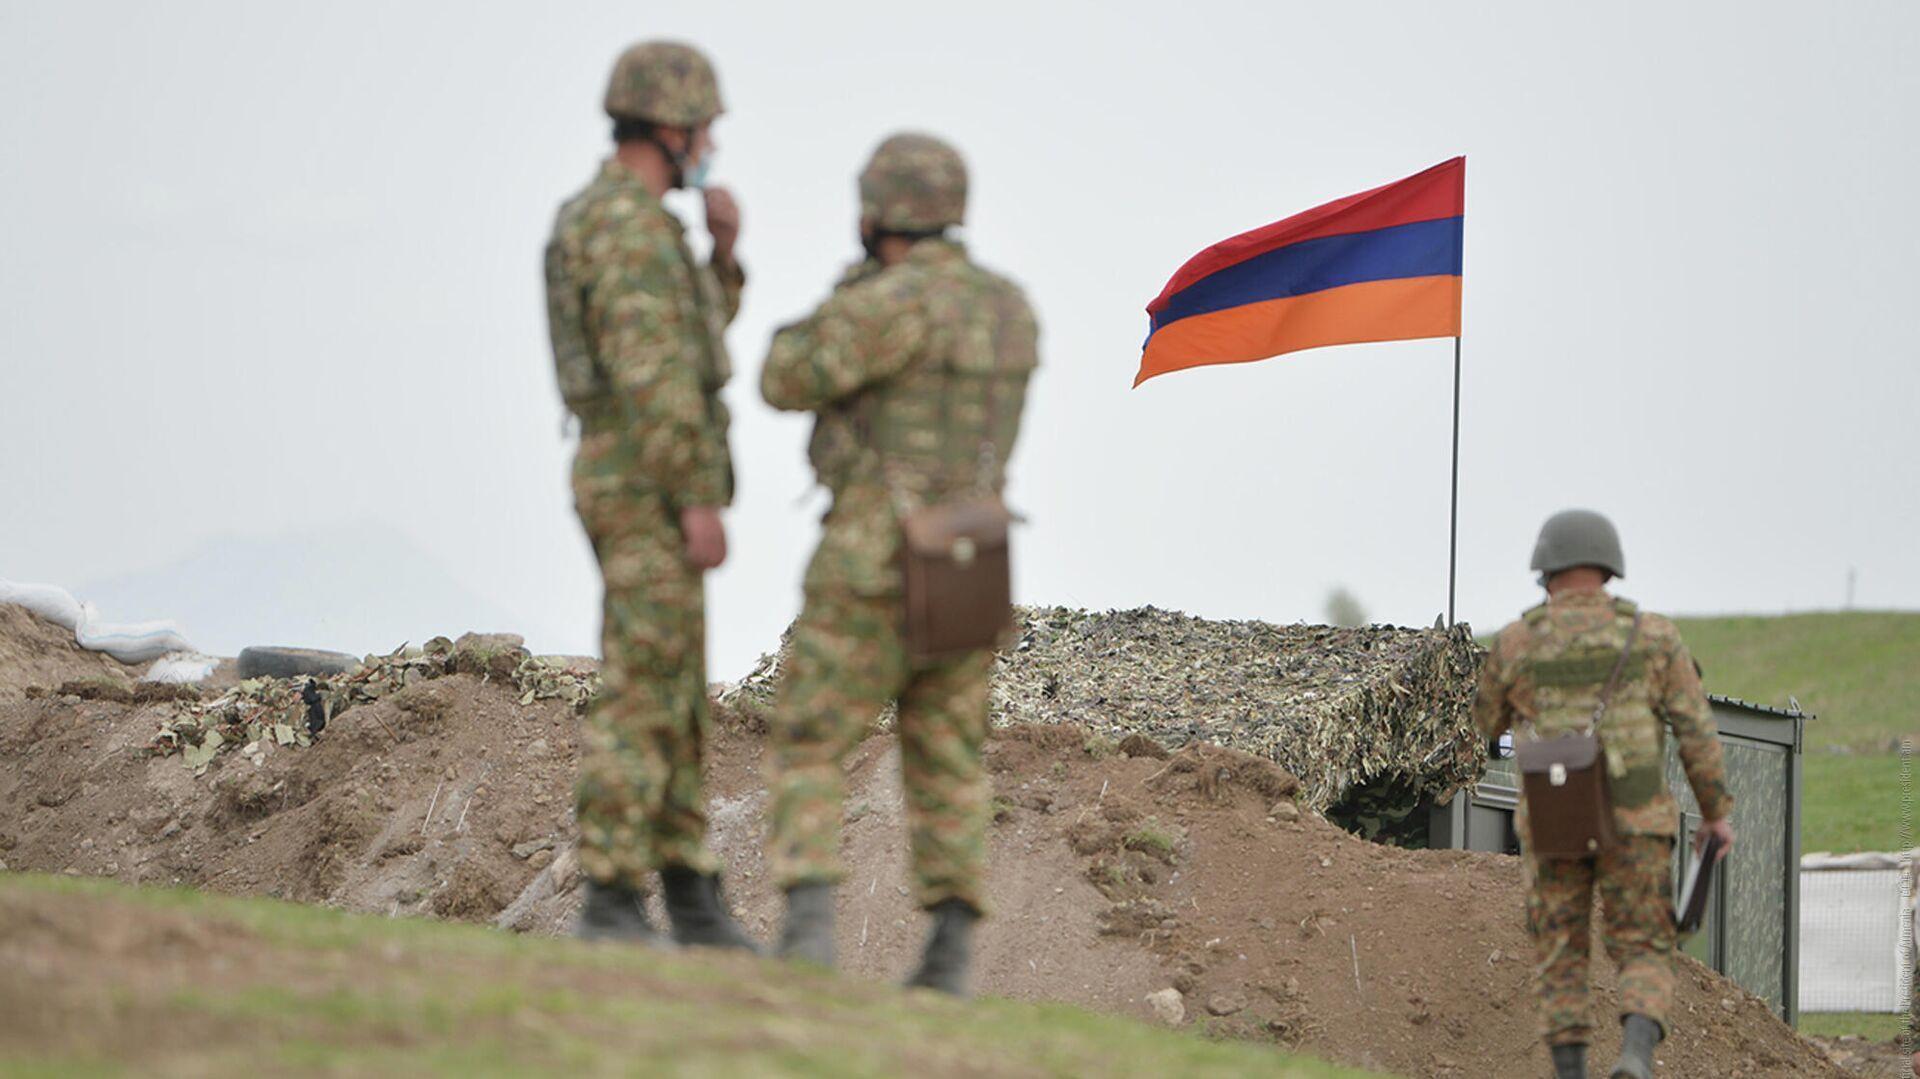 Mutual fire was reported on the Azerbaijan-Armenia border